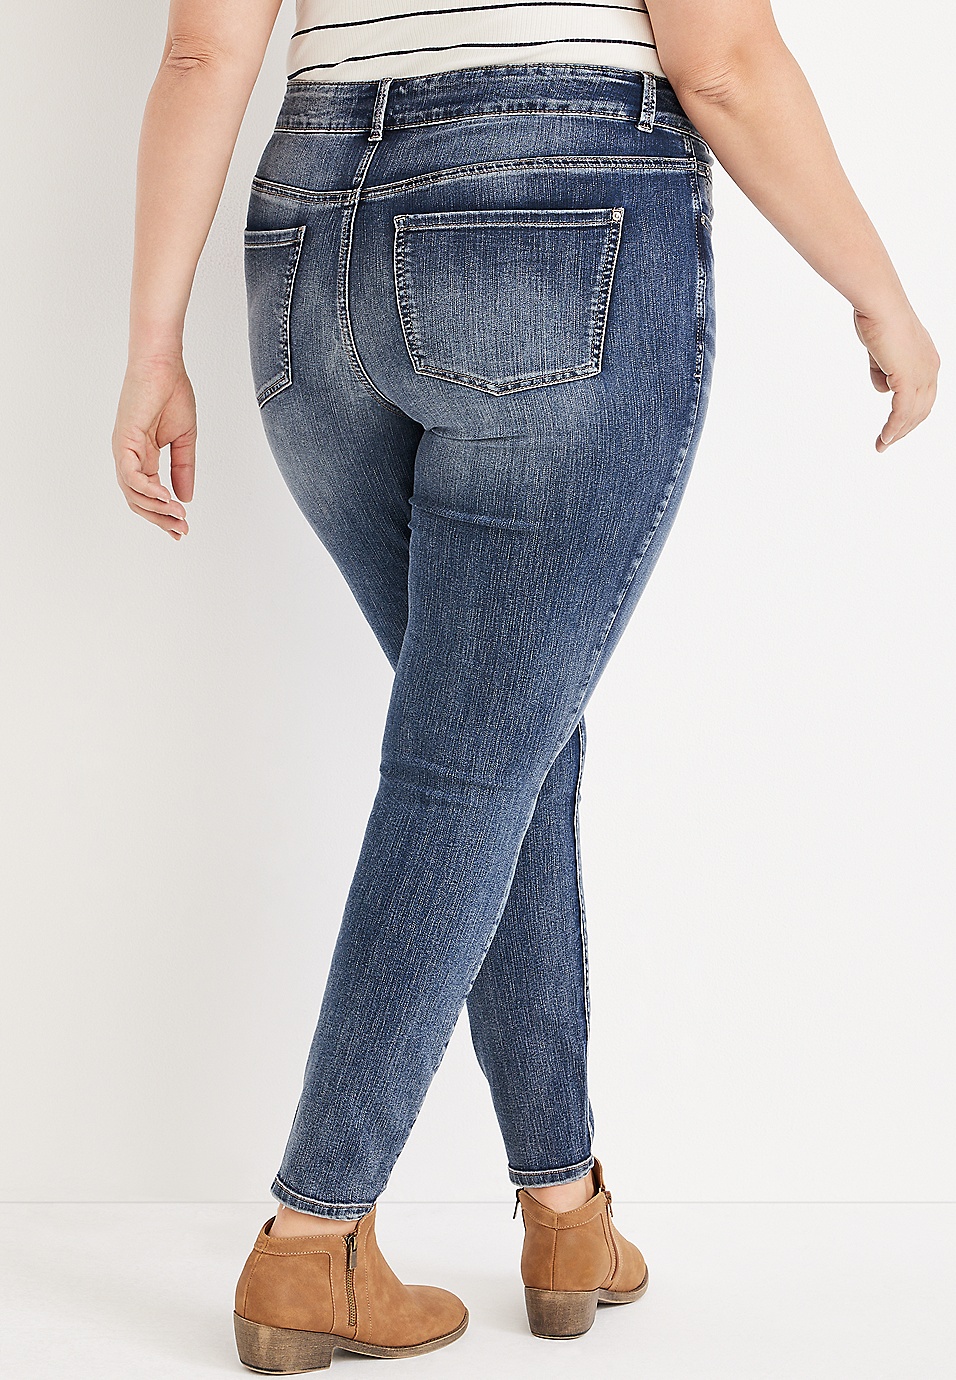 Women's size 18 maurice's jeans high rise medium wash regular